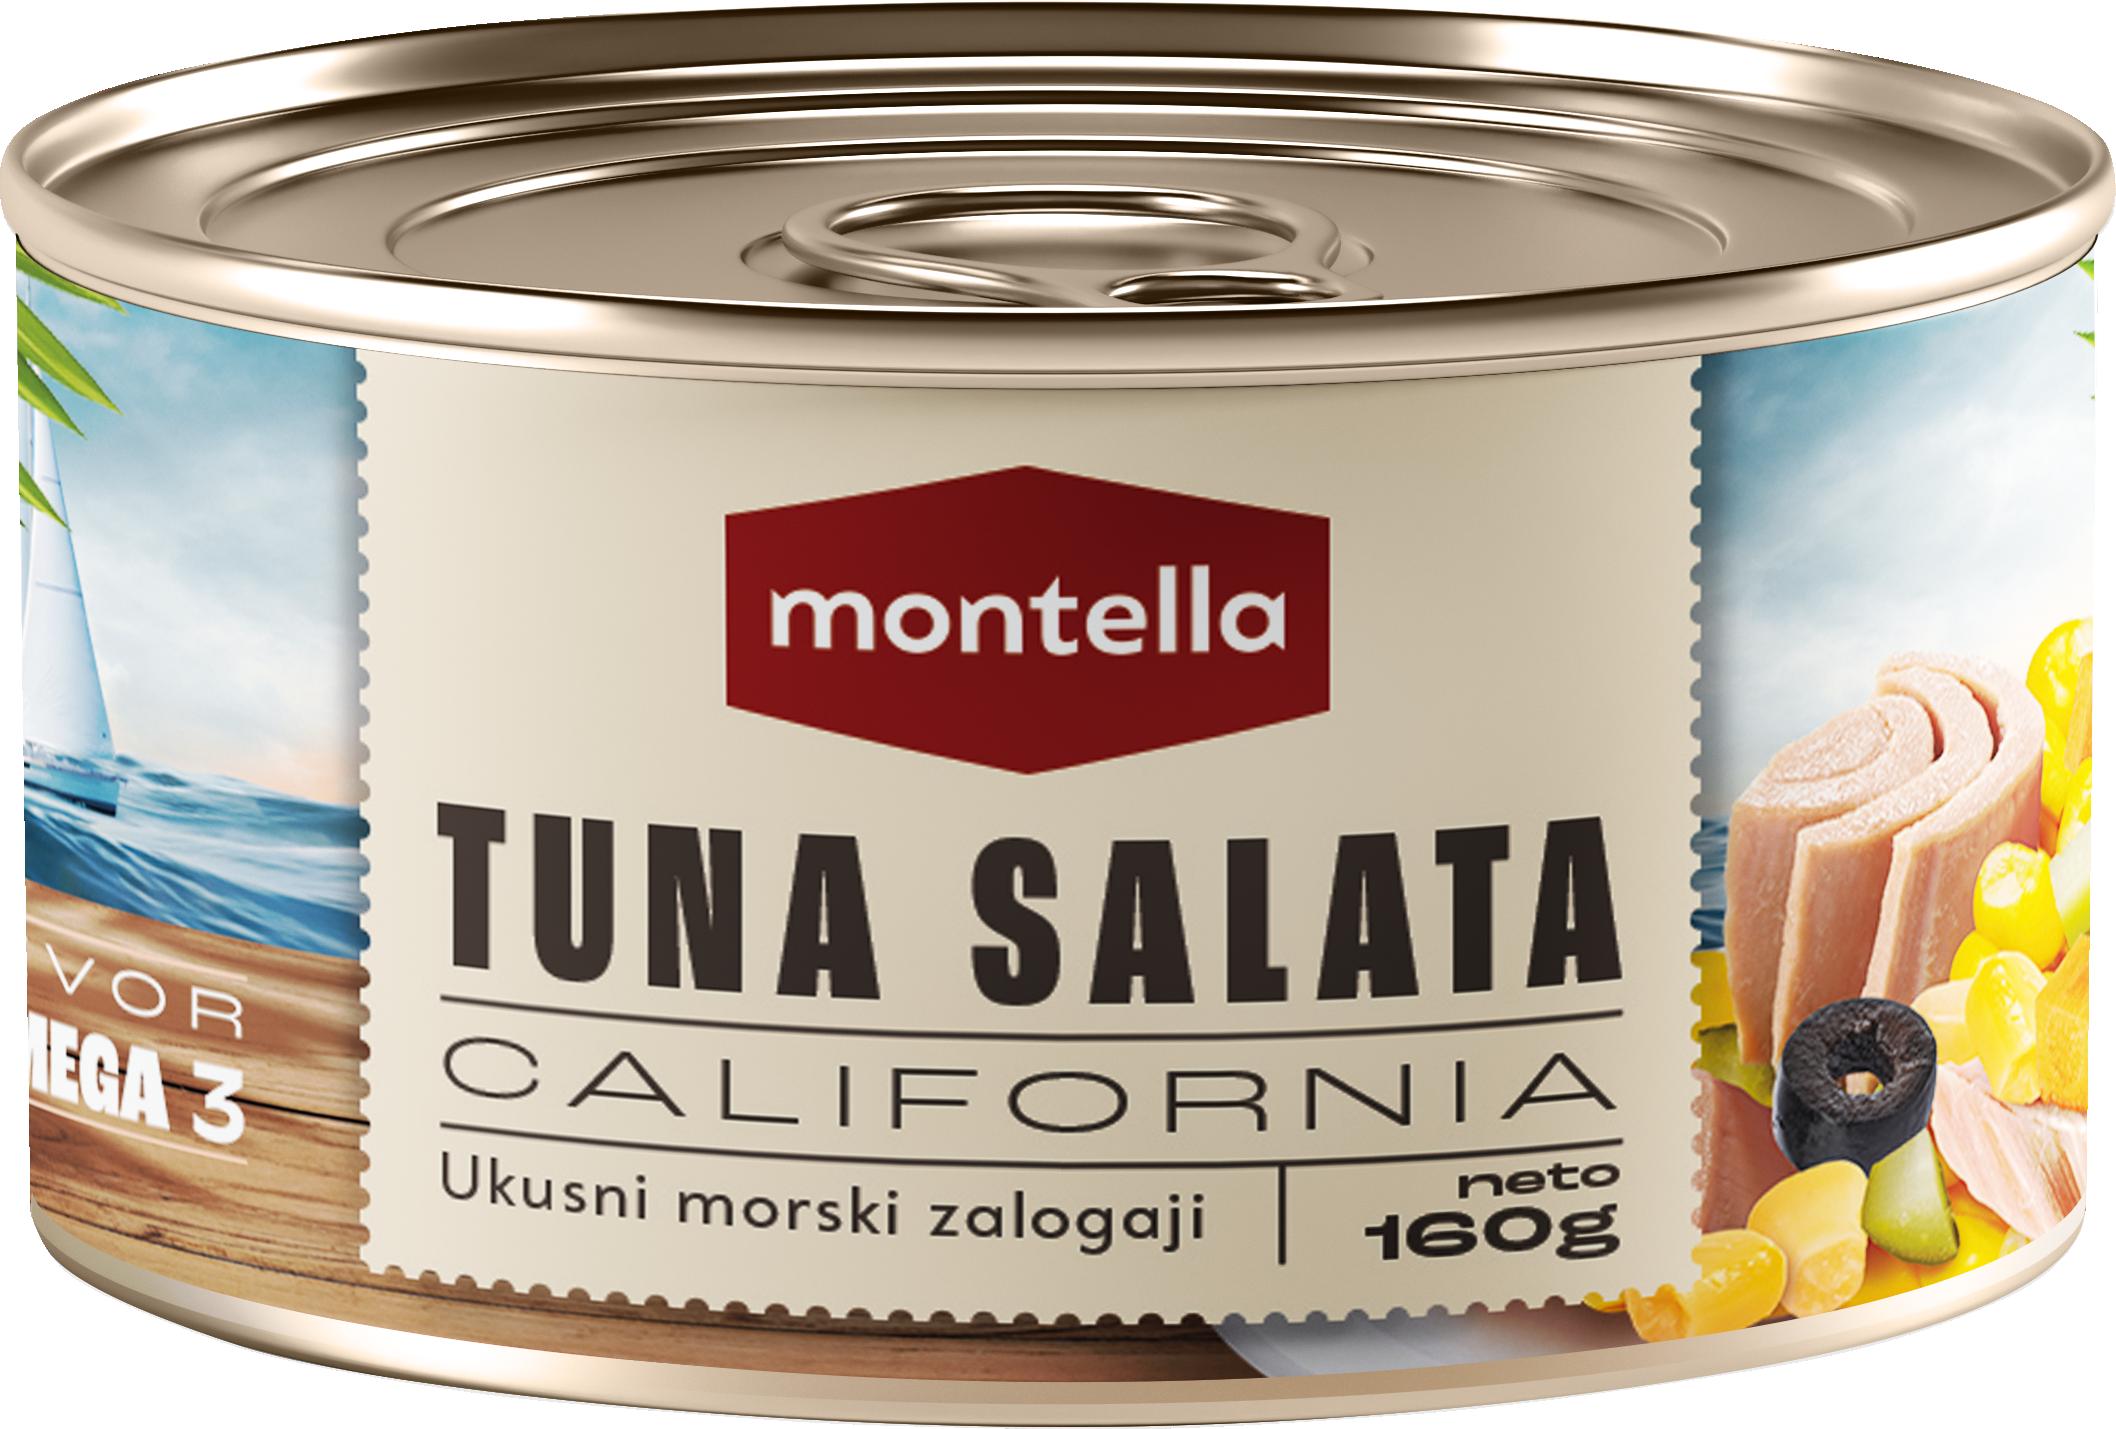 Slika za Tuna salata Montella  California 160g